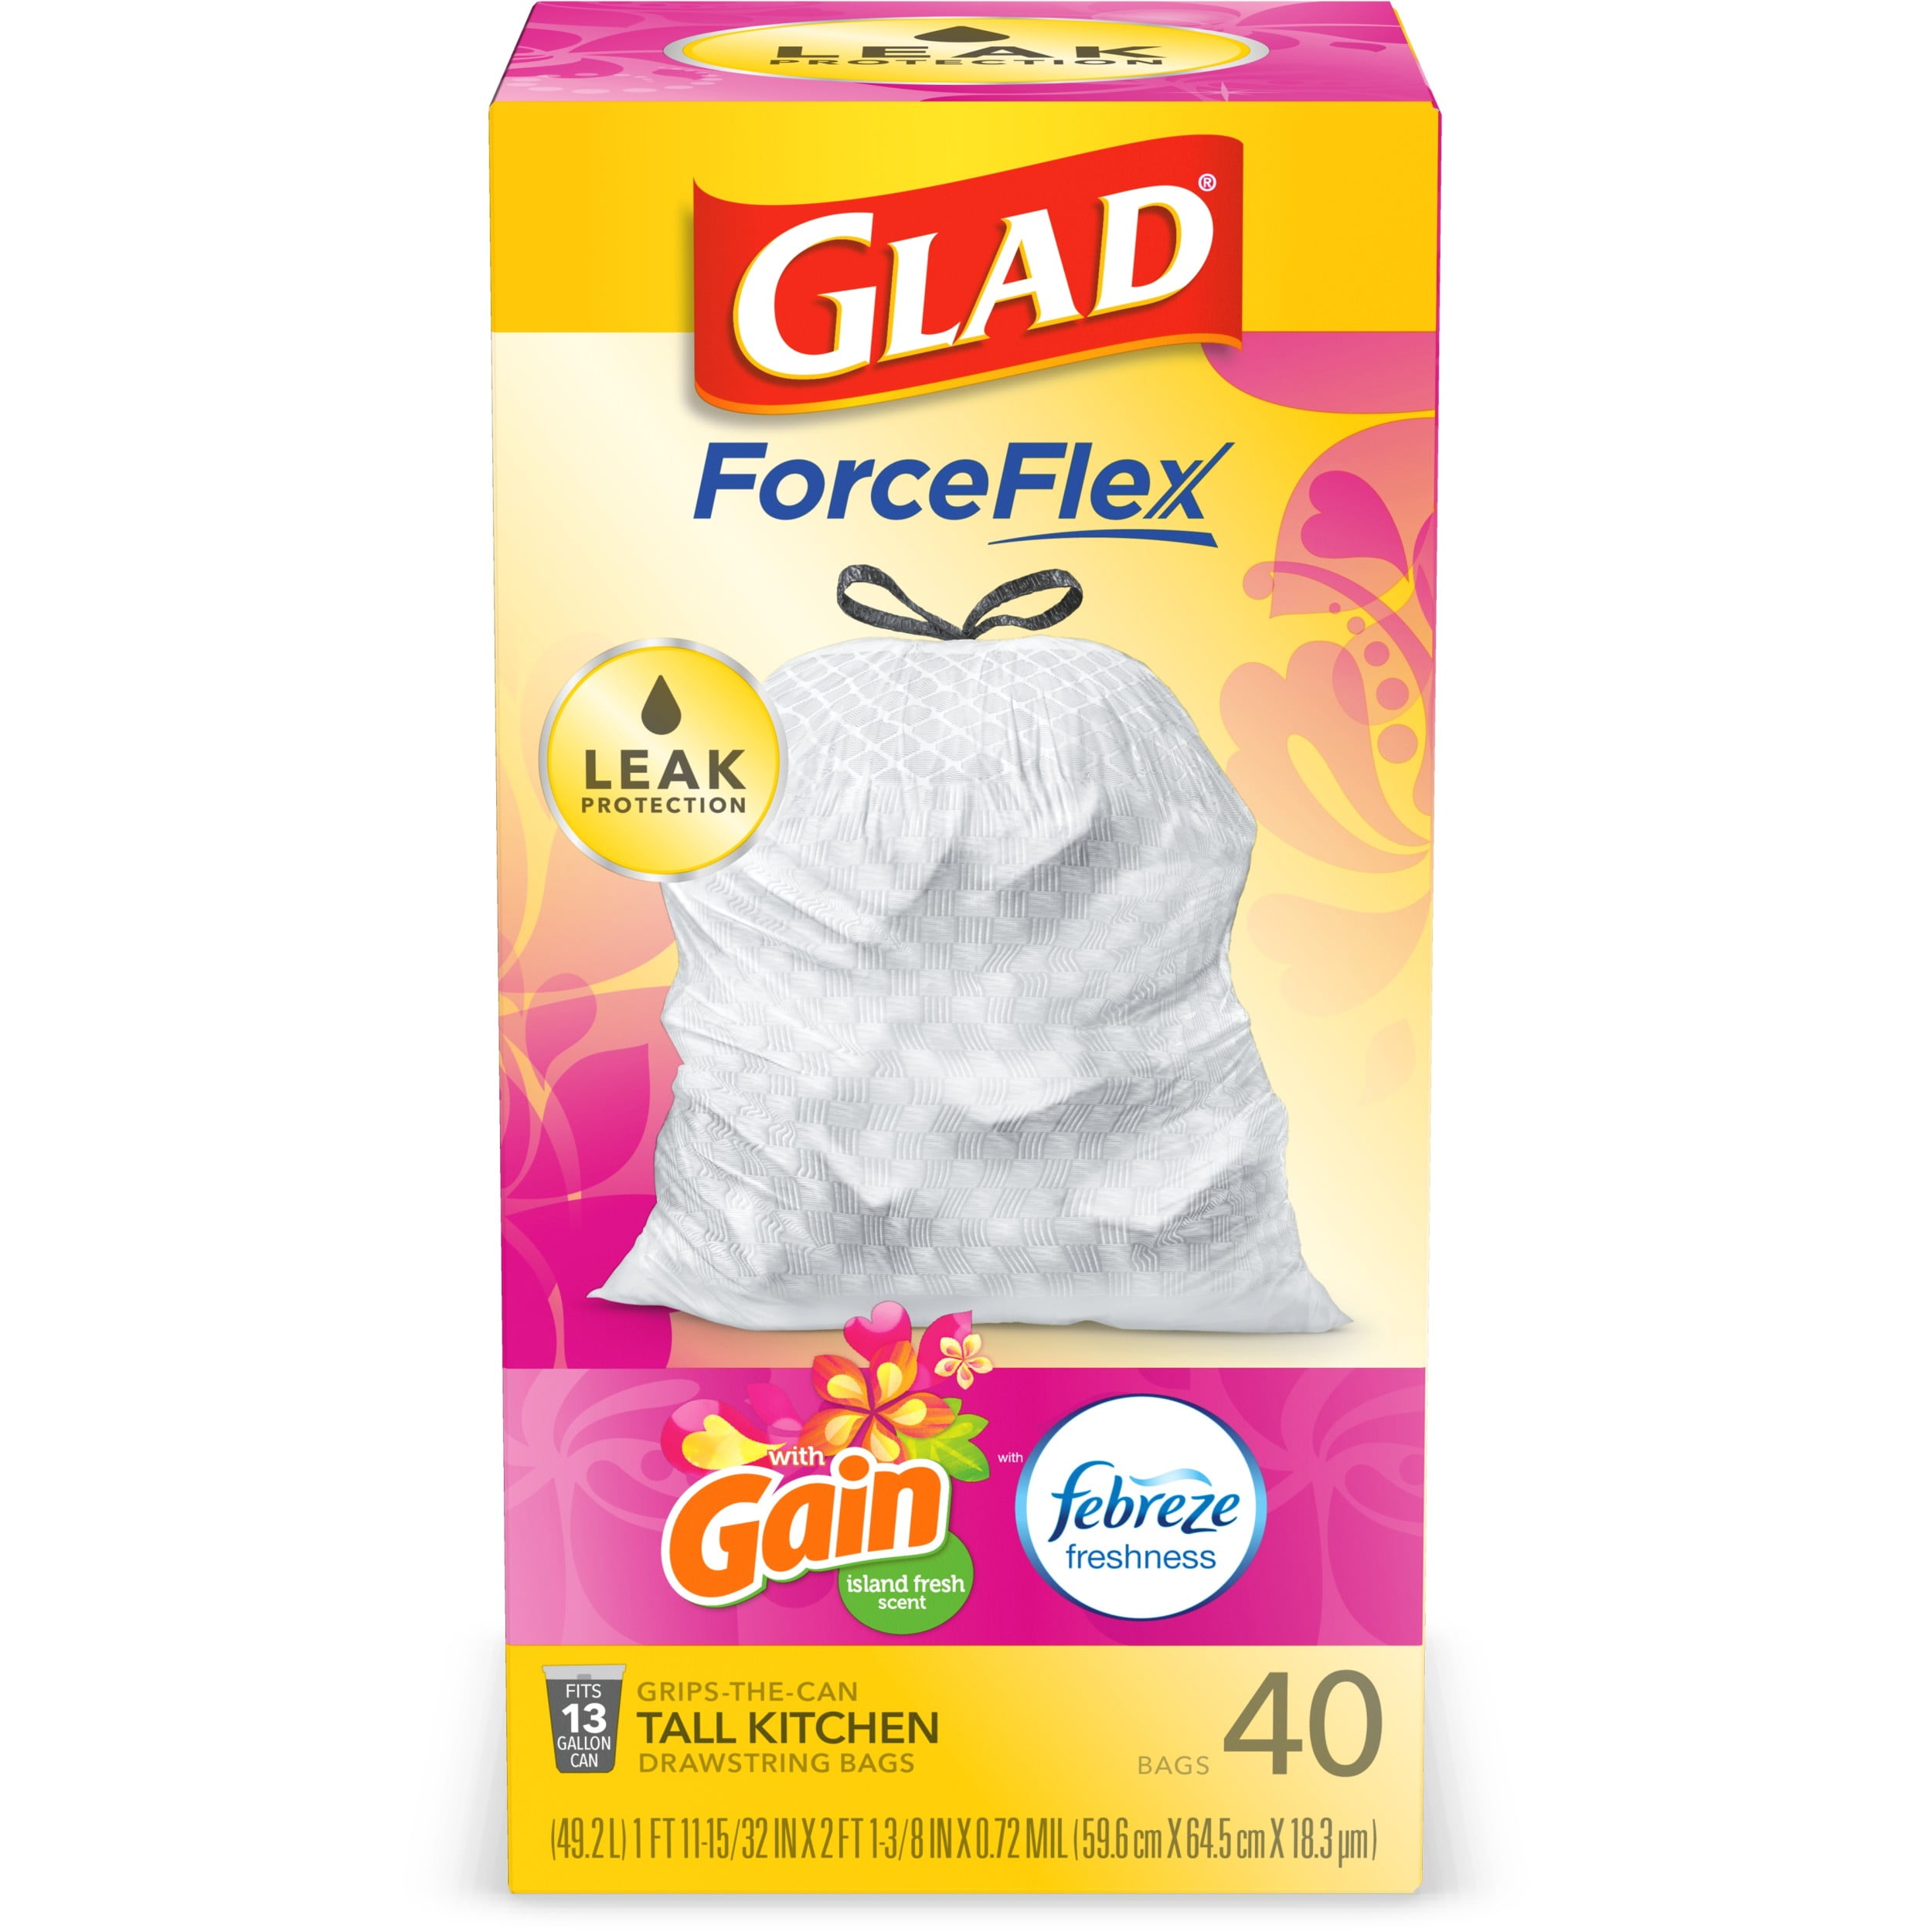 Glad ForceFlex Tall Kitchen Trash Bags, Gain Original Scent with Febreze  Freshness (13 gal., 150 ct.) - Sam's Club